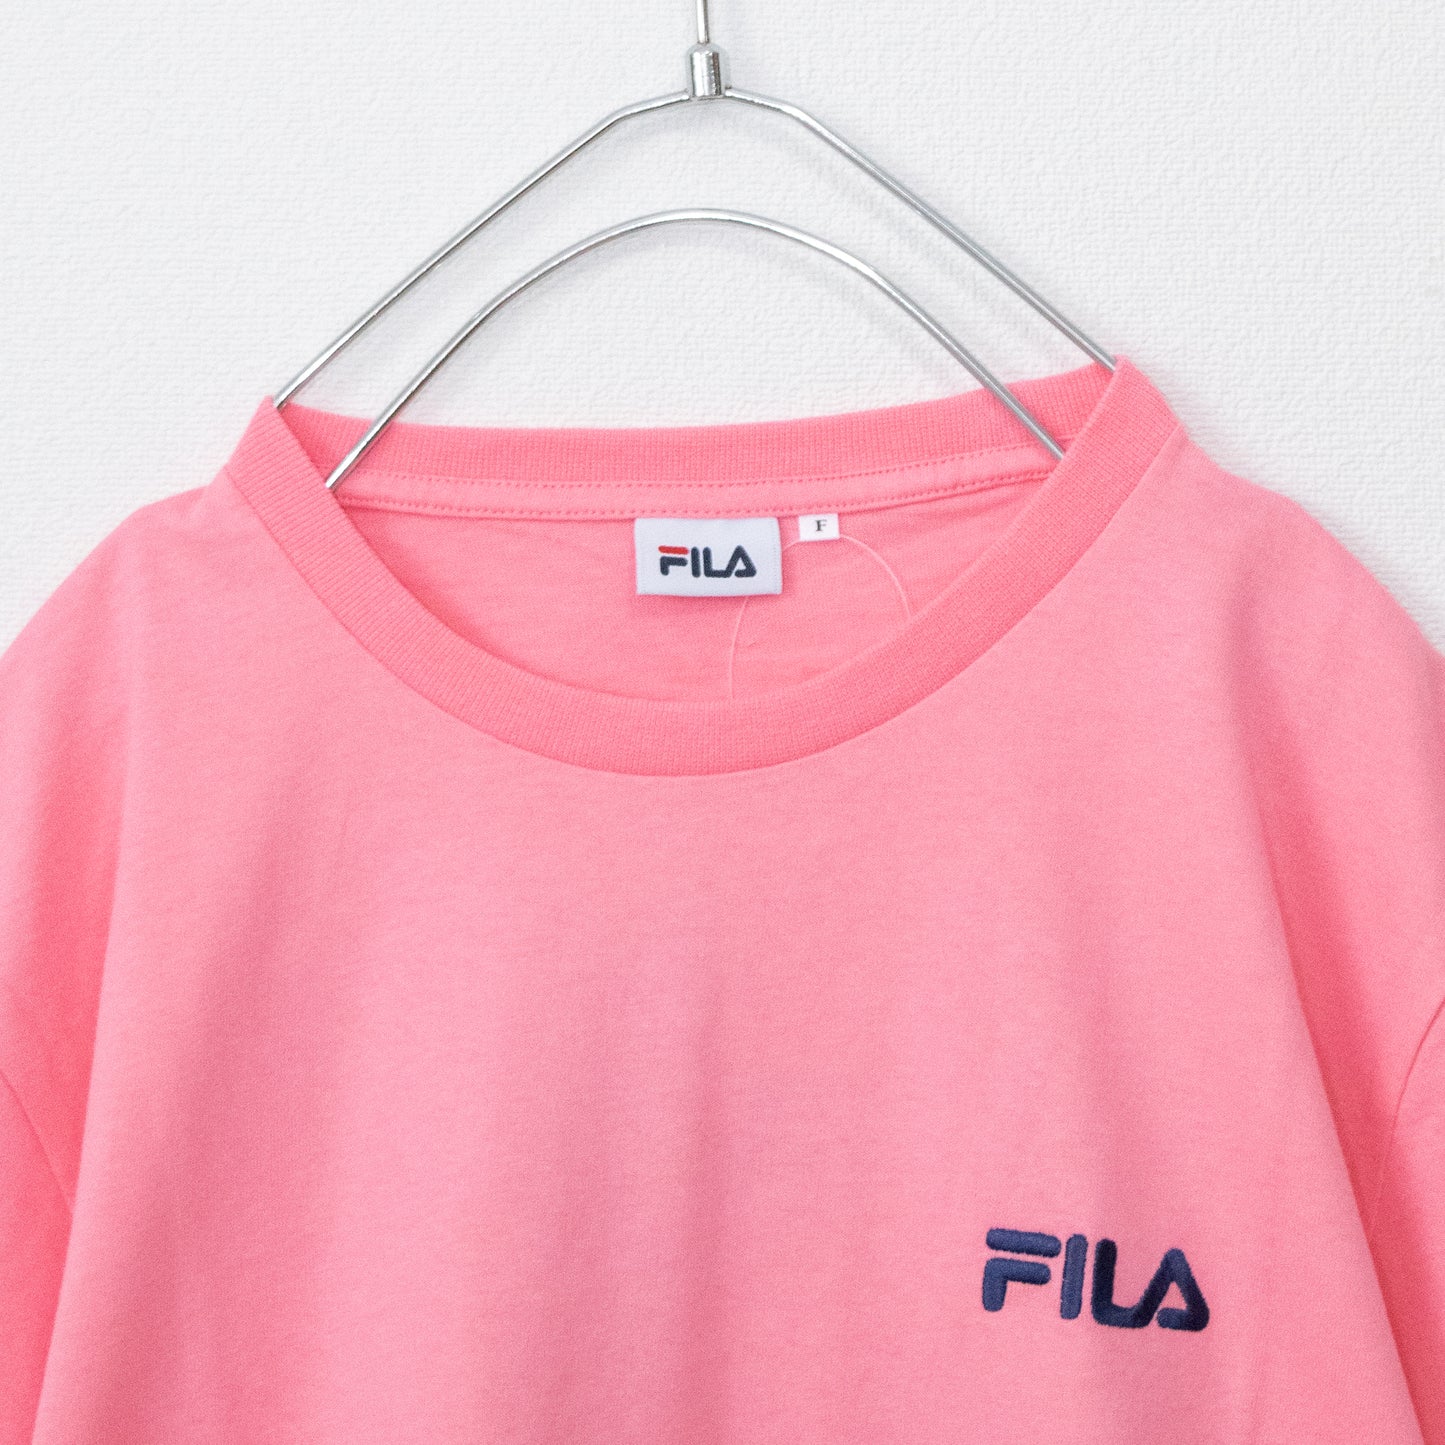 FILA BTS worn model T-shirt PINK